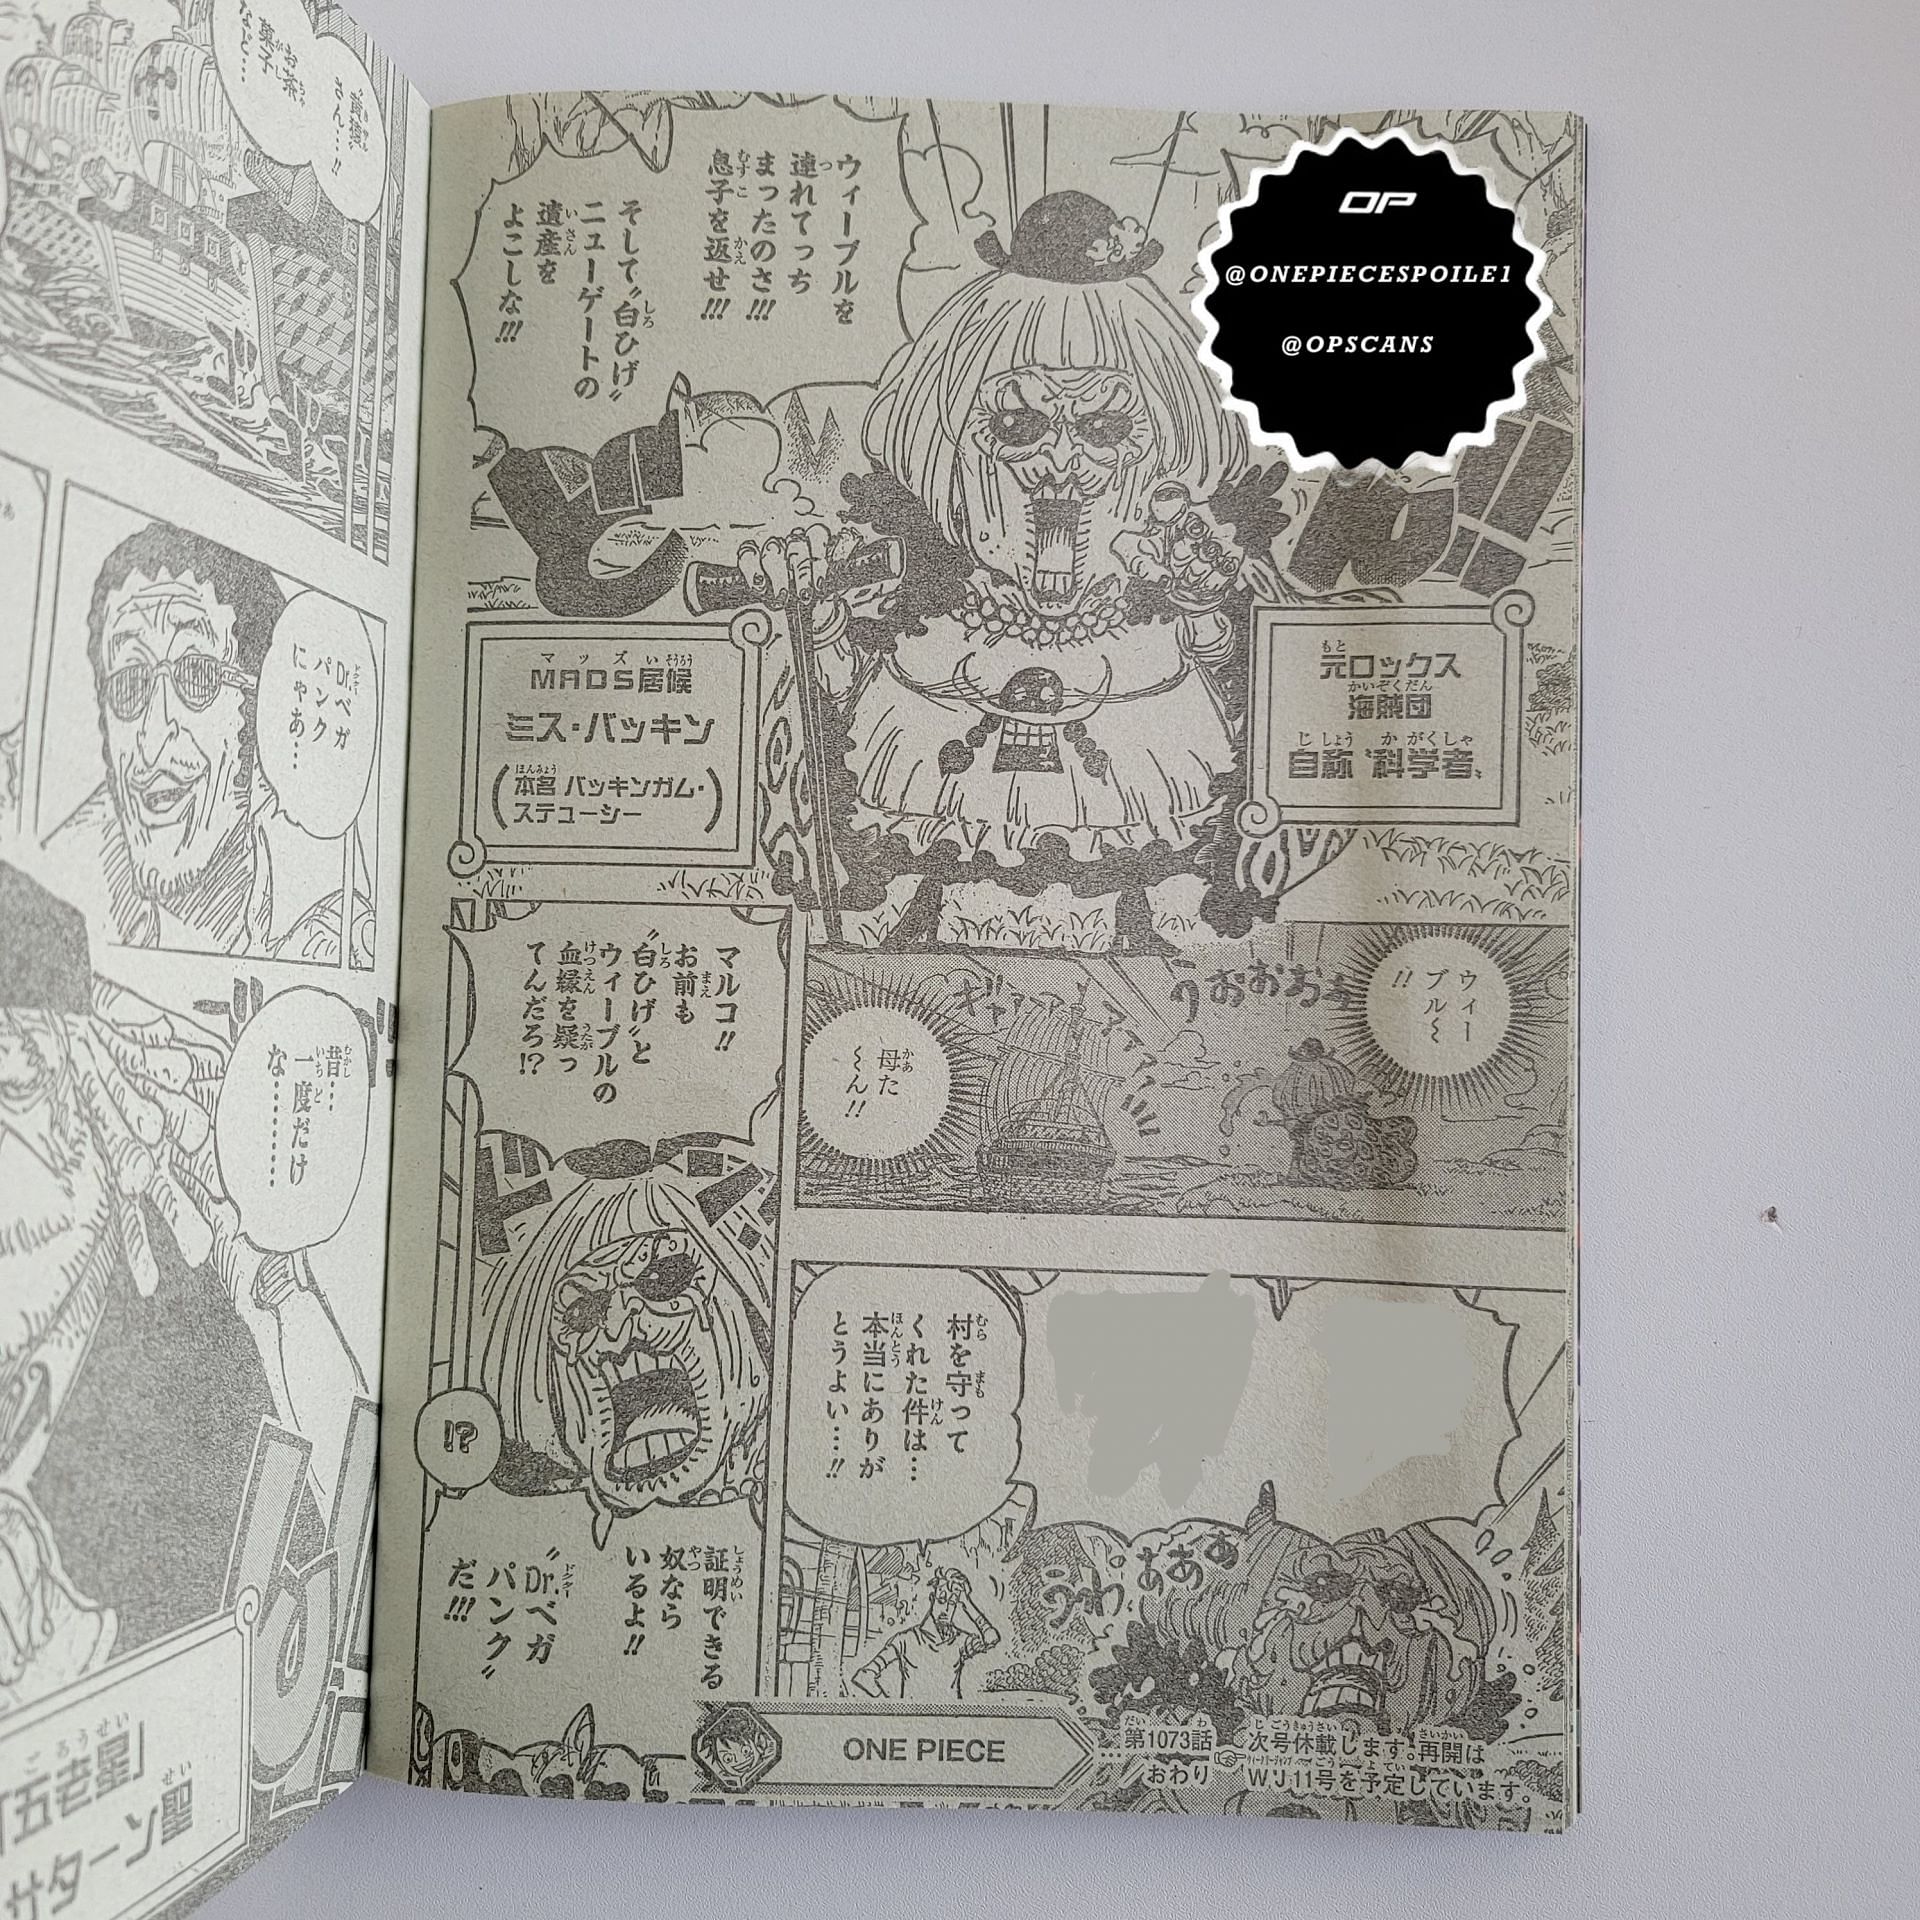 Miss Bakkin crying to Marco in One Piece Chapter 1073 (Image via Eiichiro Oda)